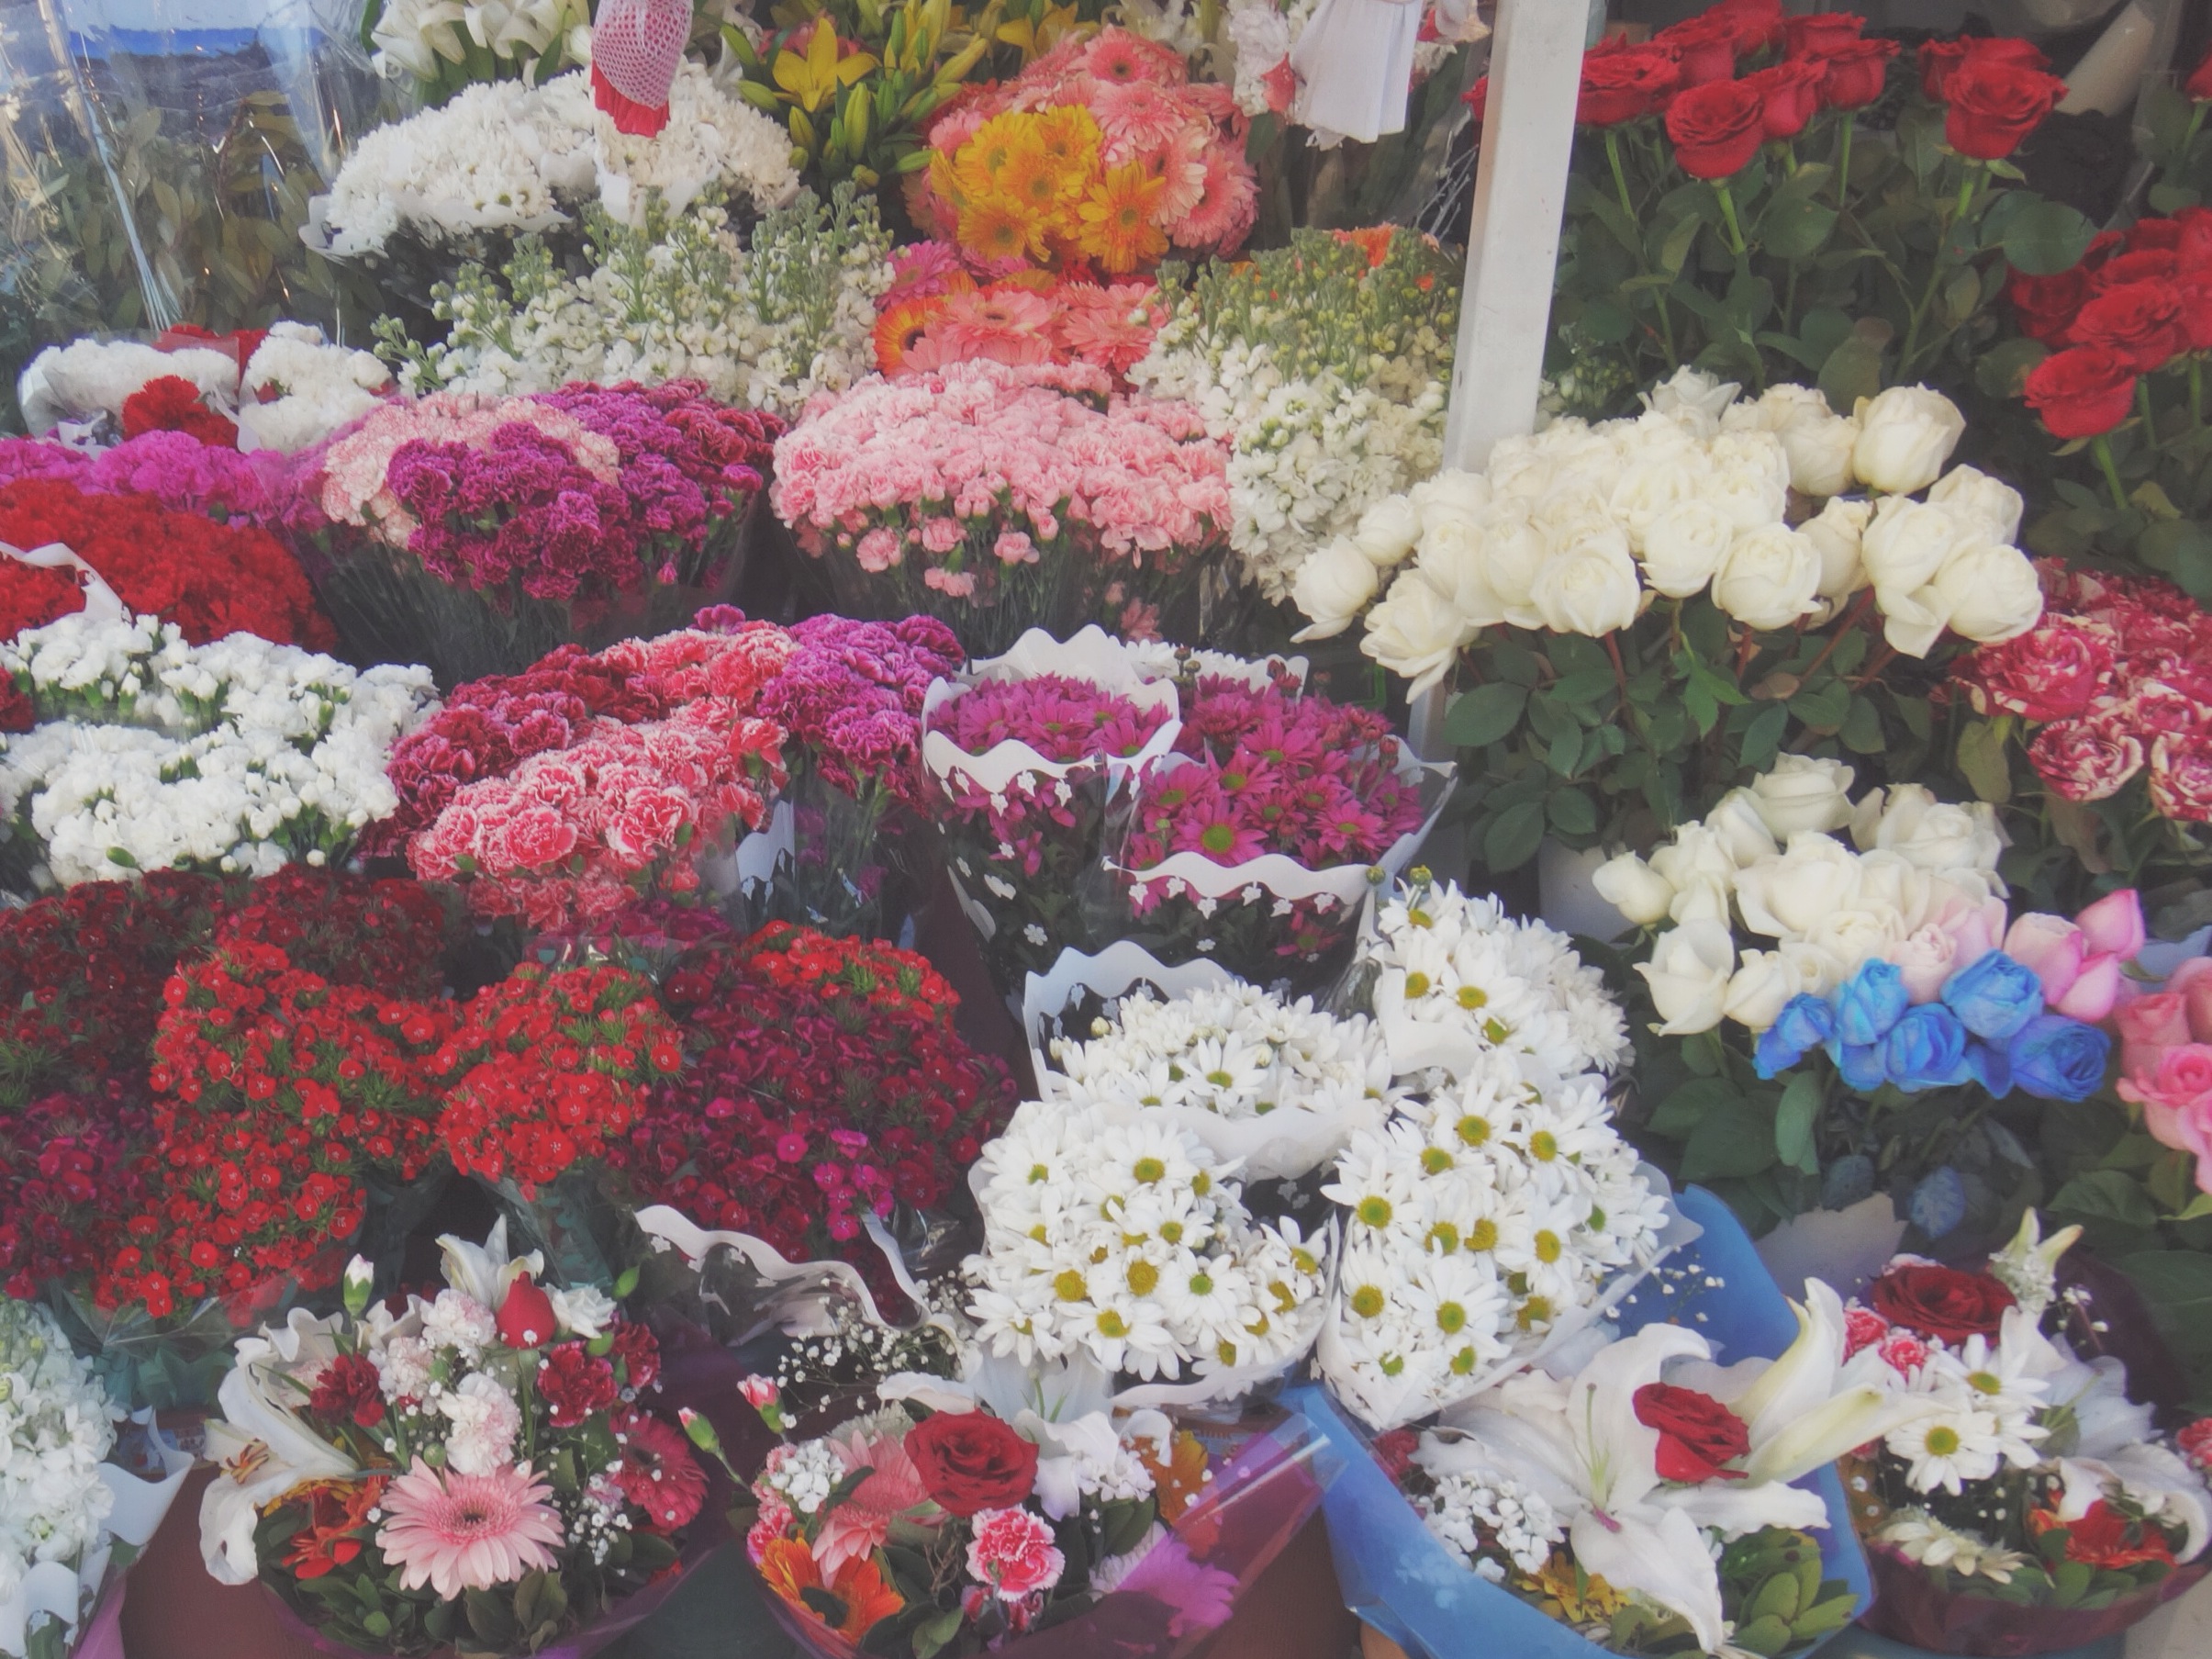 Flower Shop at Taksim Square, Istanbul